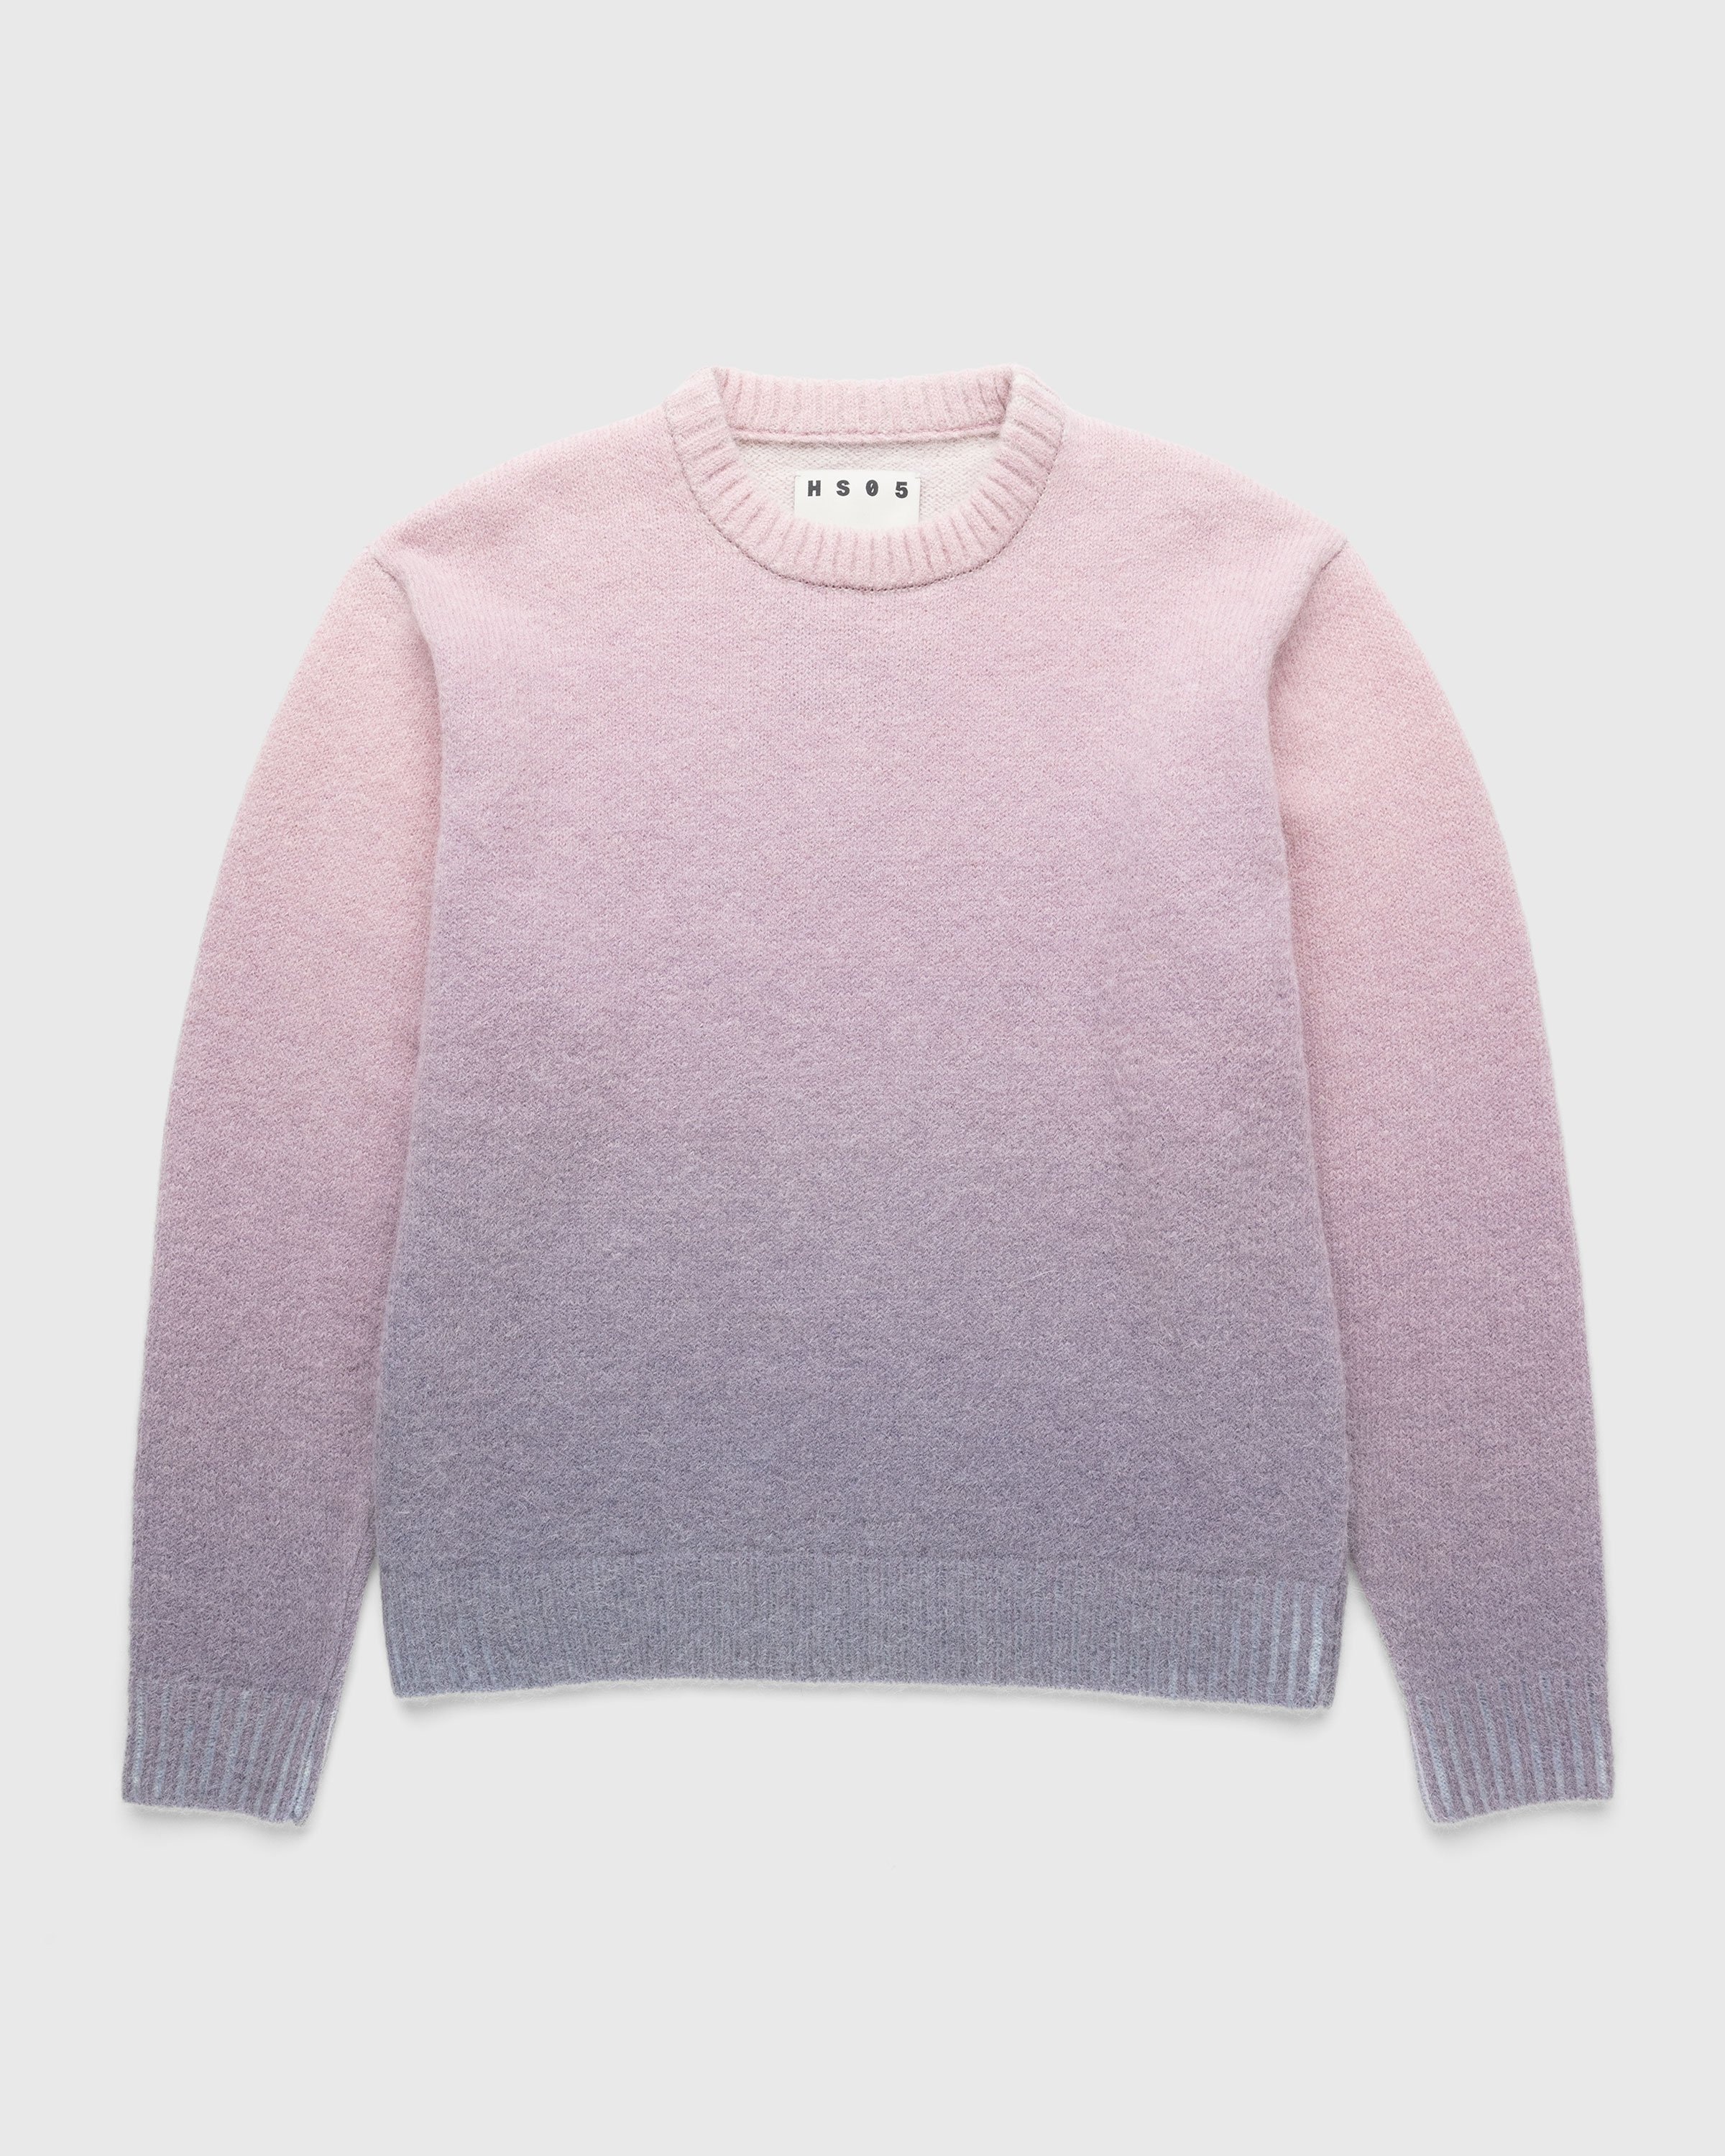 Highsnobiety HS05 – Alpaca Static Sweater Pink - Knitwear - Pink - Image 1